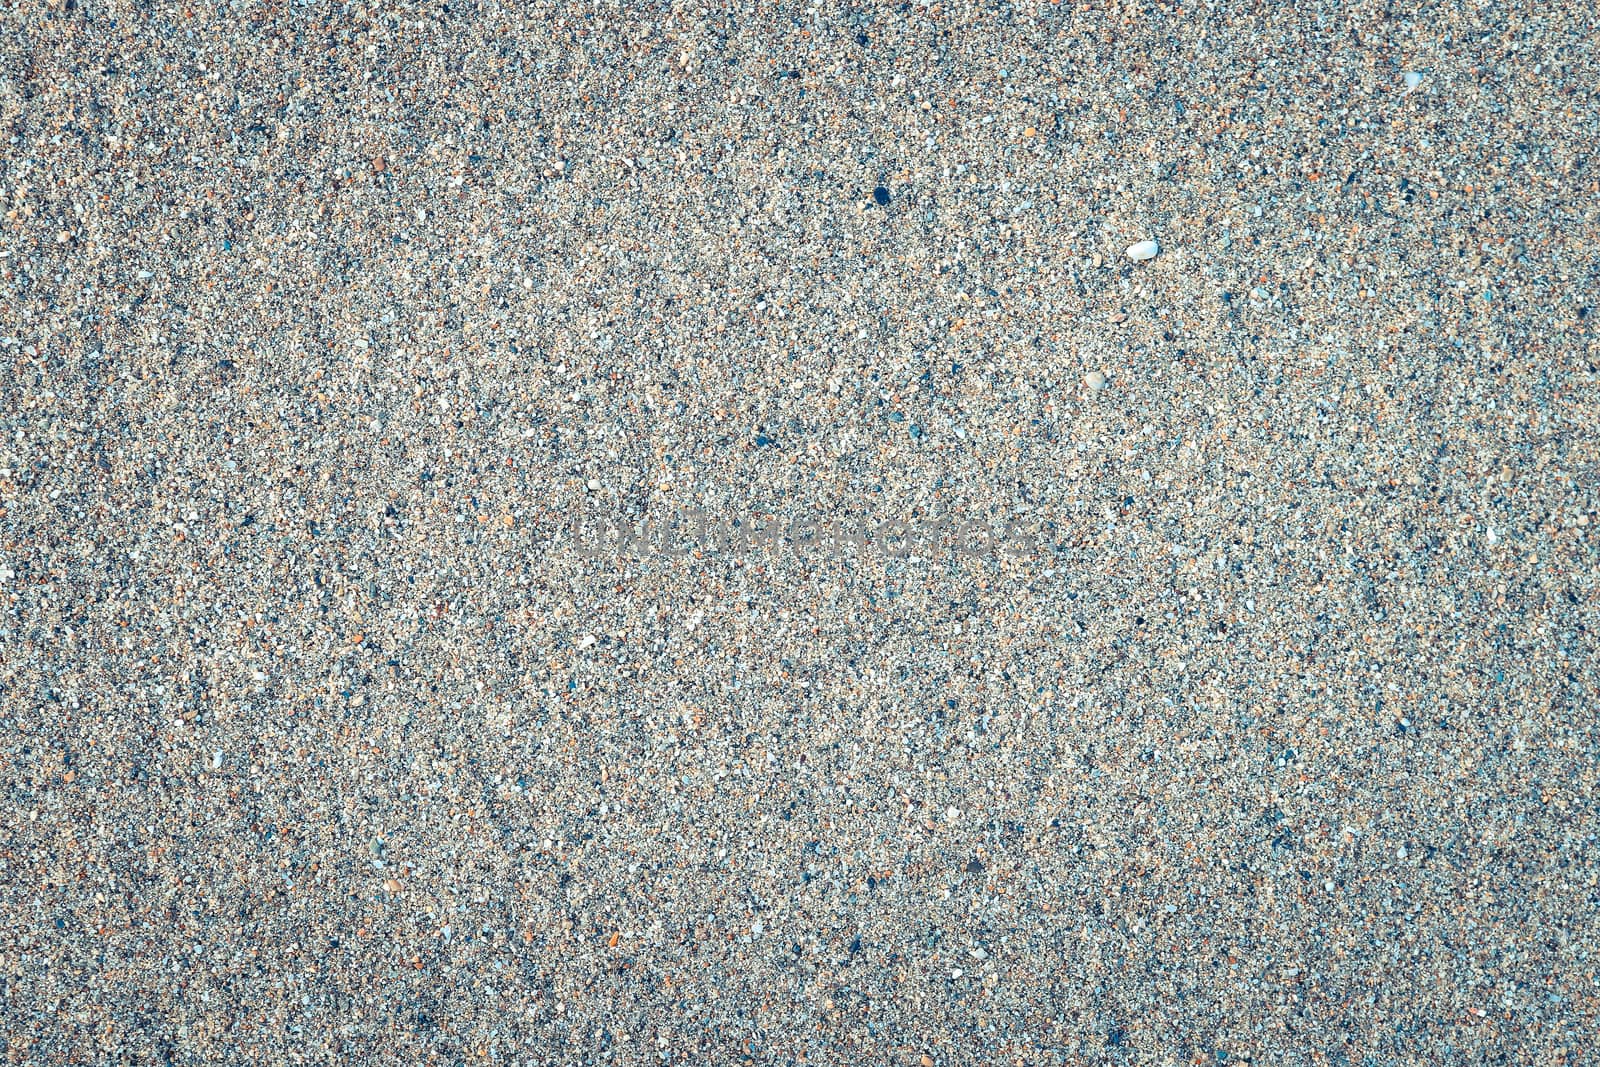 Outdoor sand background. Sea Beach Sand Texture. Sandy Surface Backdrop.